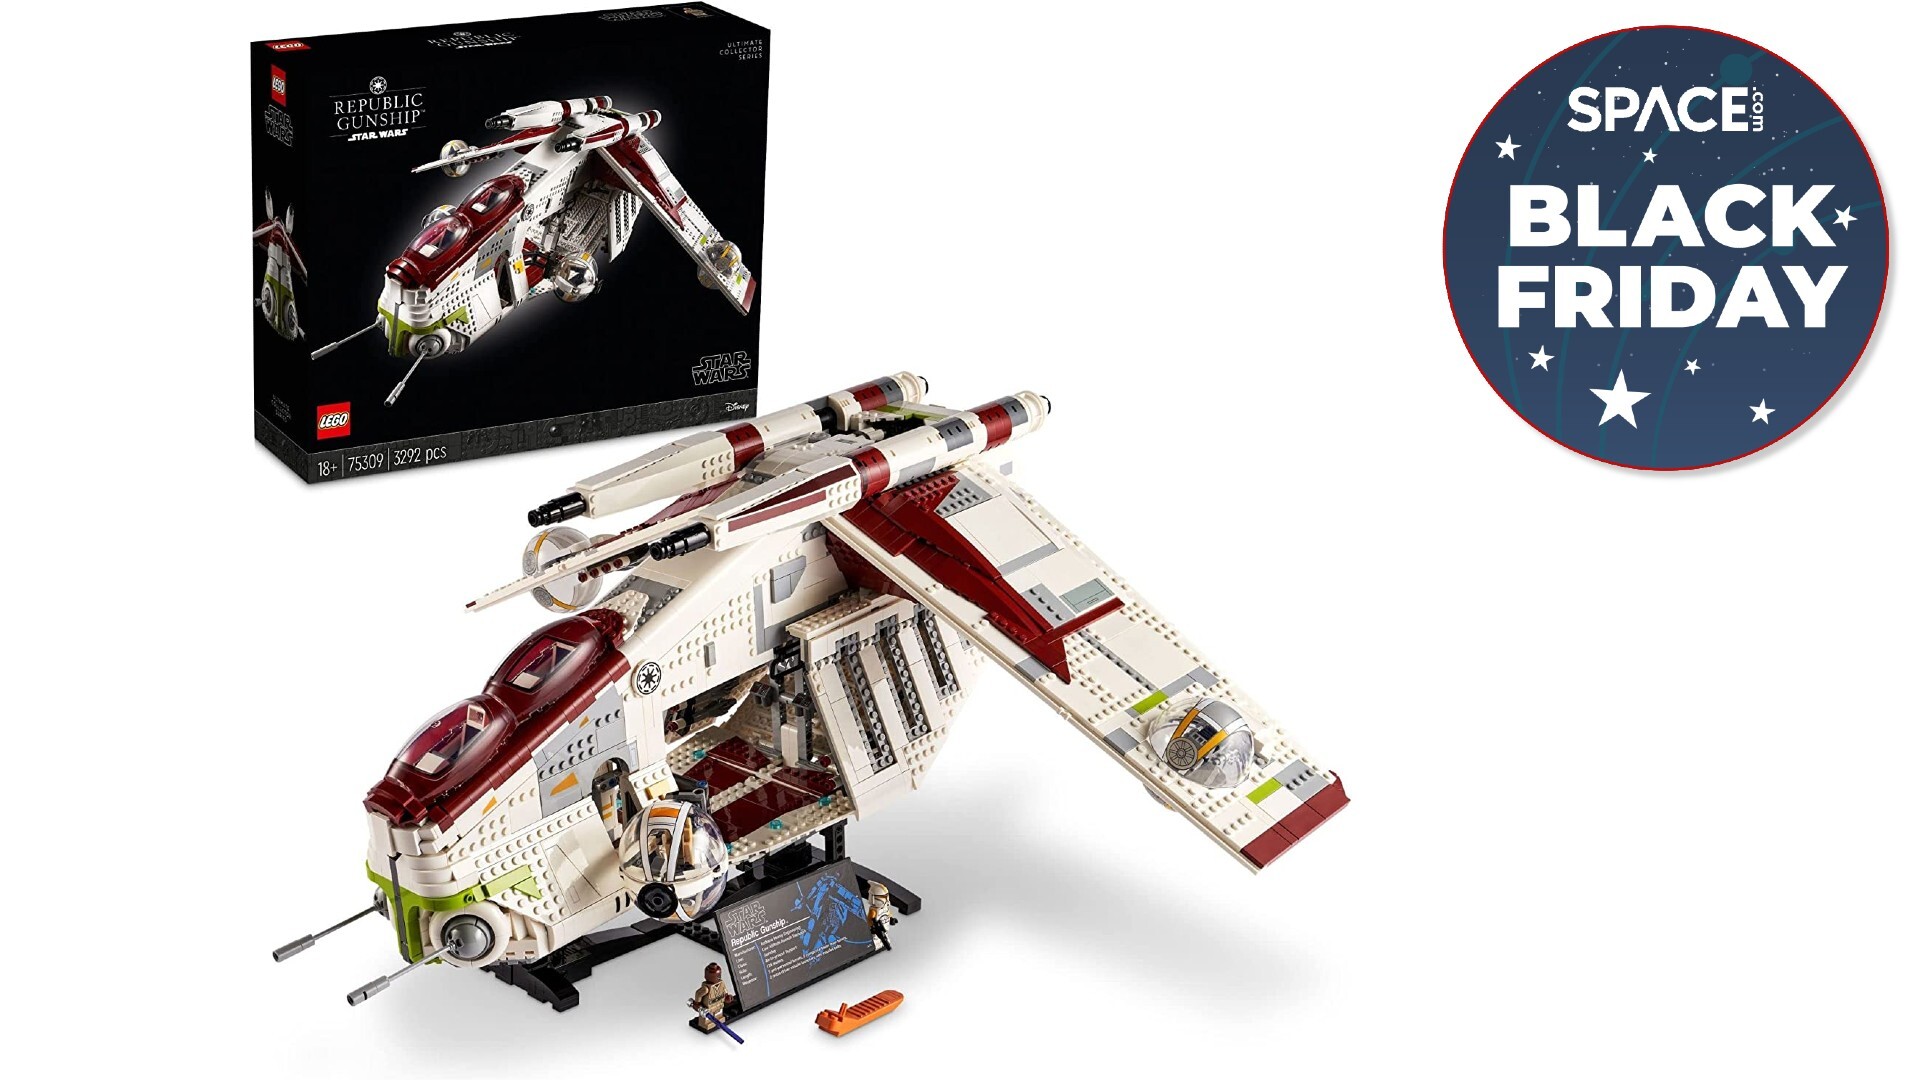 Save $70 on this Lego Star Wars Republic Gunship this Black Friday